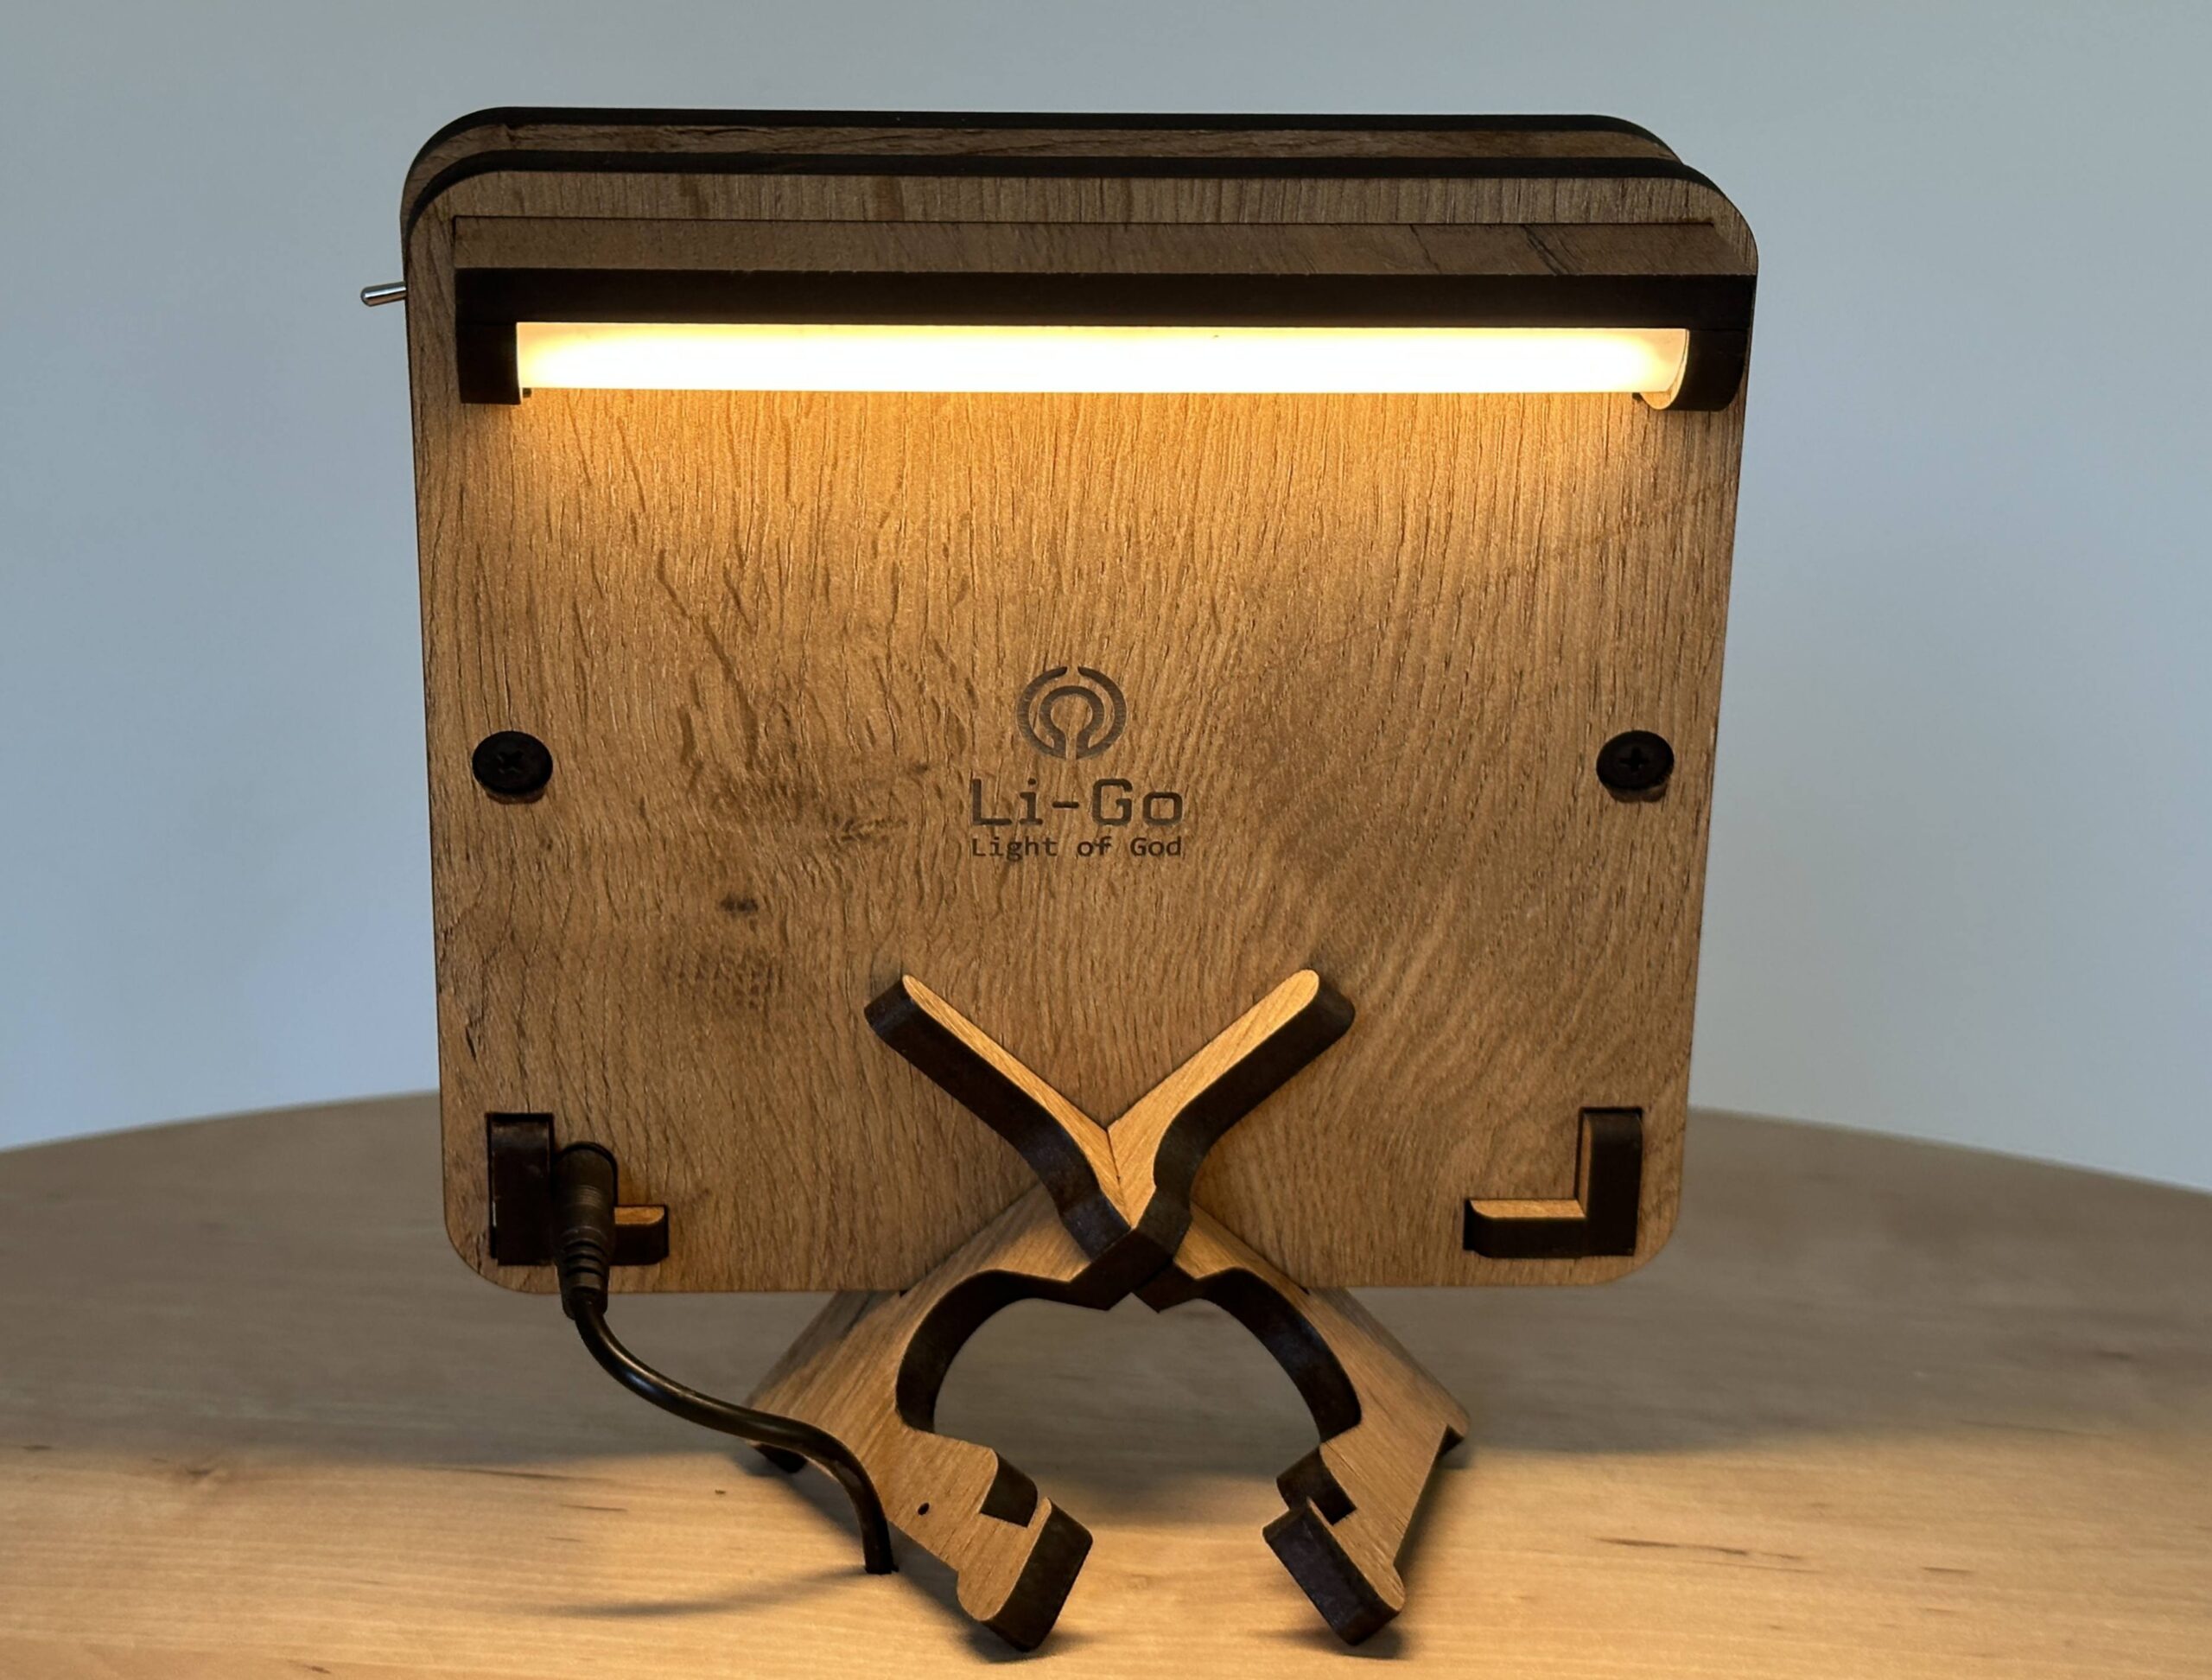 Li-Go Znamení "Panna" lampa 19x19cm provedení povrchu: dub B